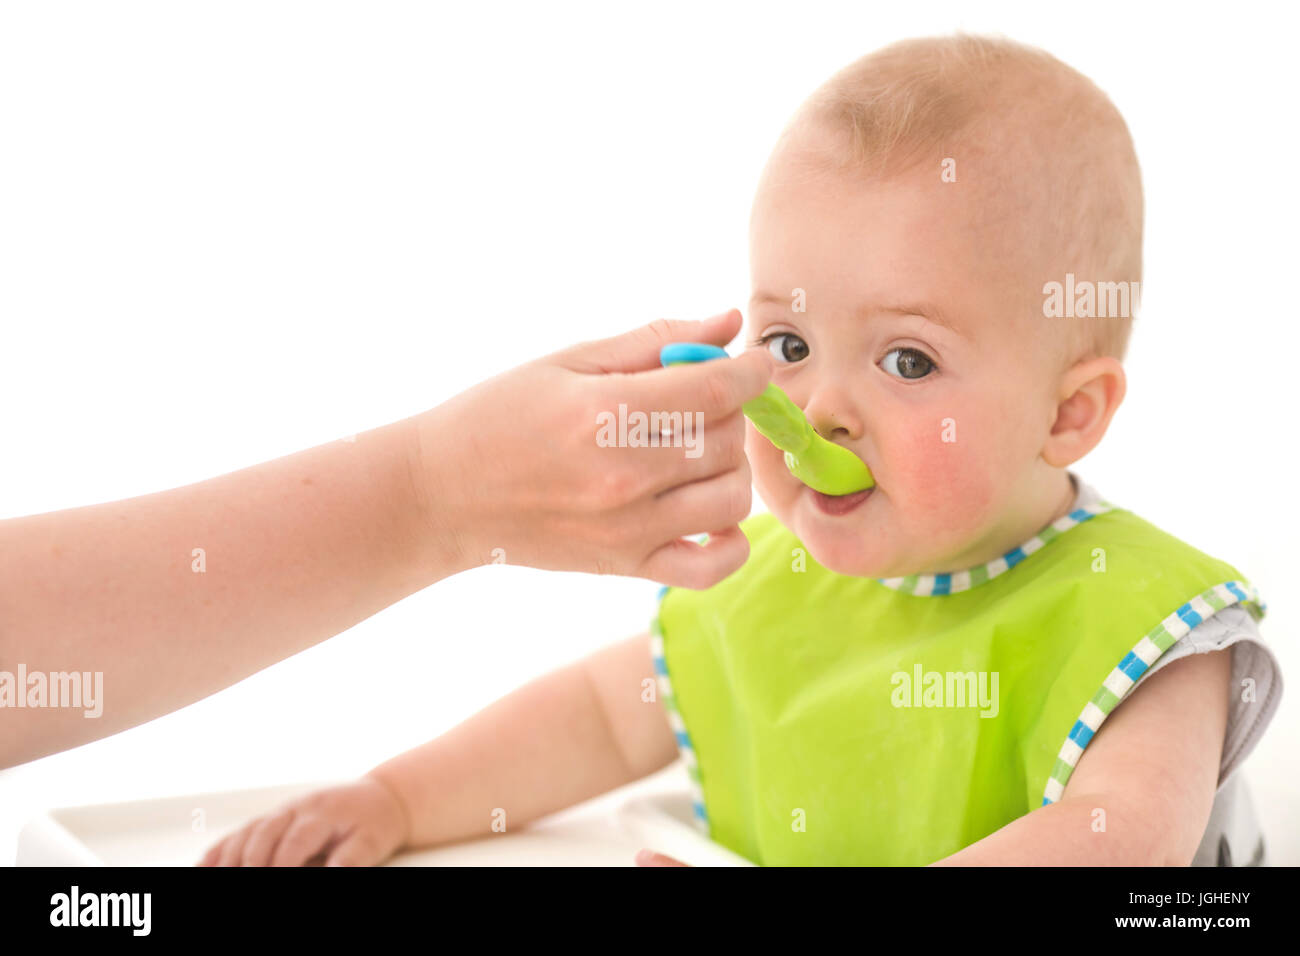 Parent feeding infant child Stock Photo